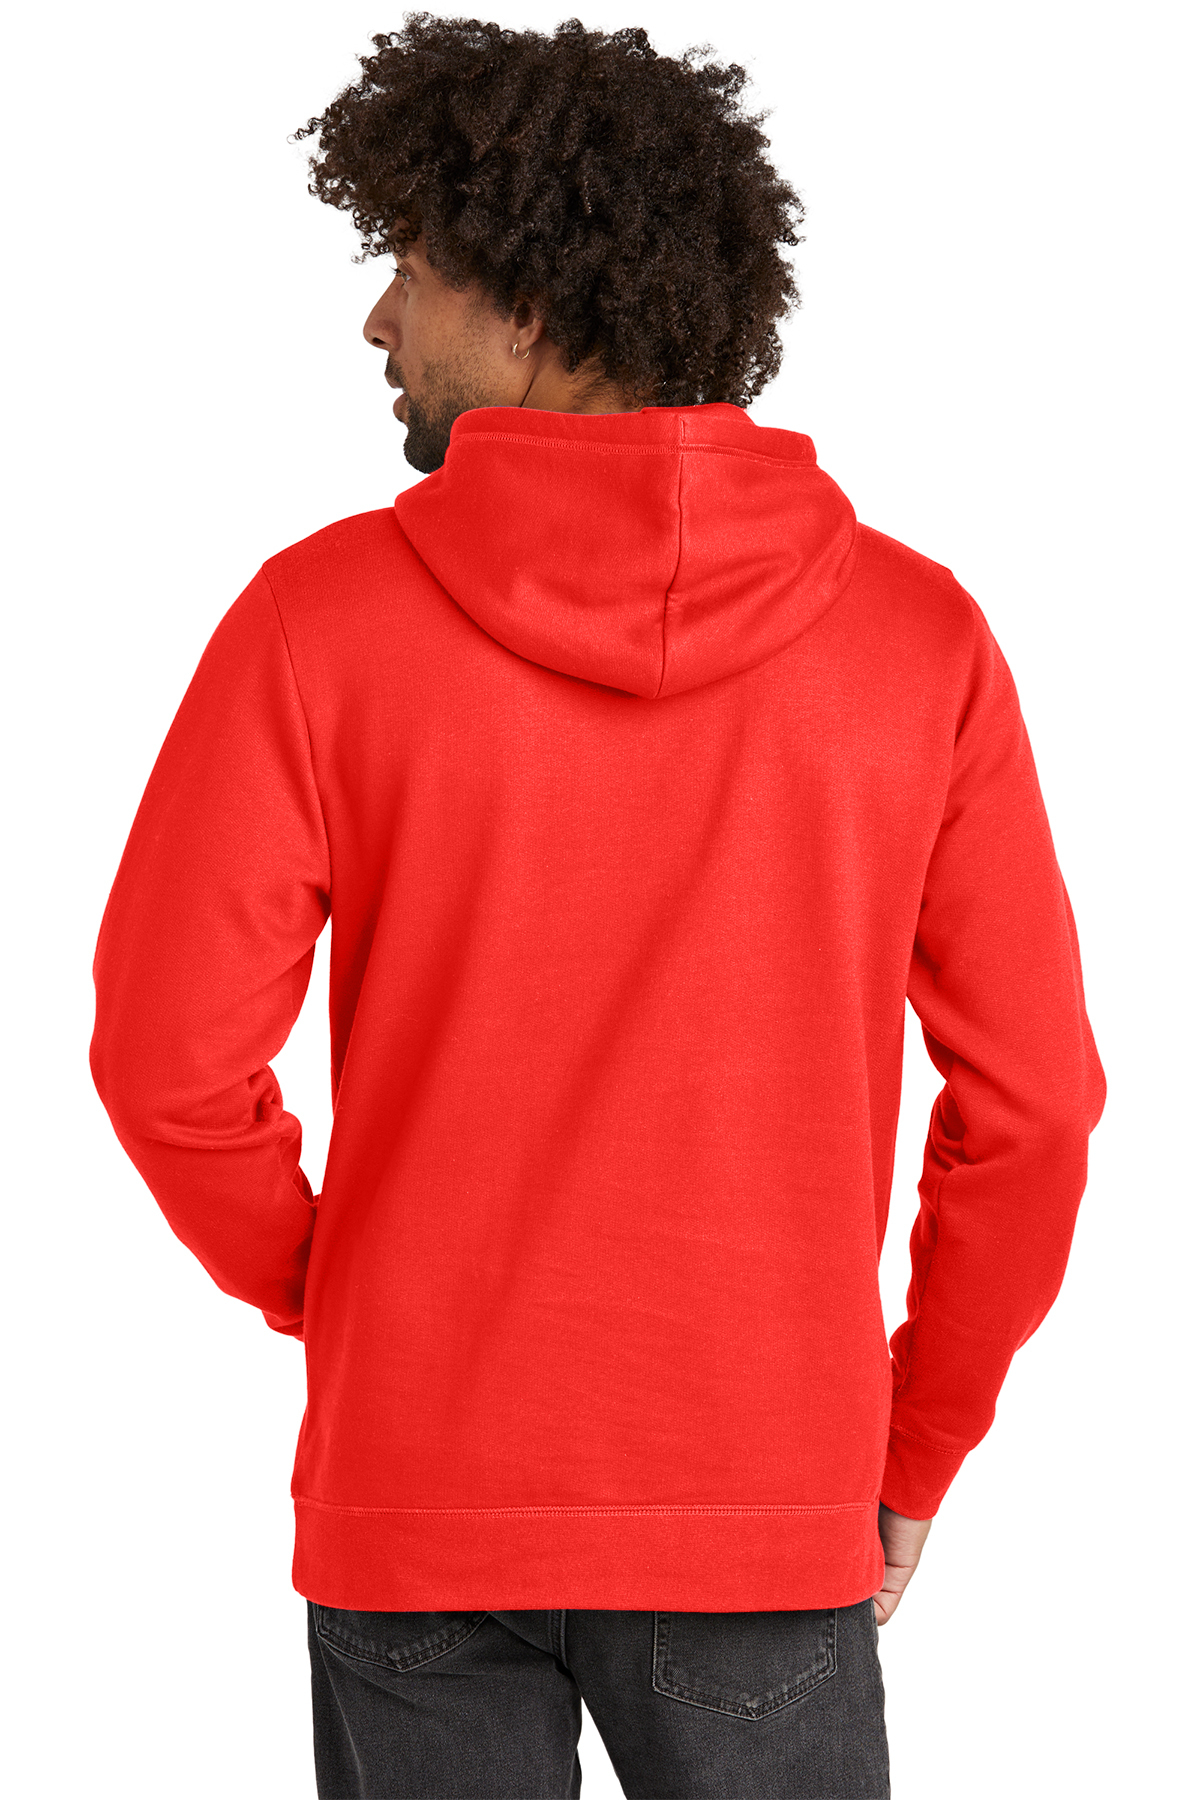 New Era Comeback Fleece Pullover Hoodie | Product | SanMar